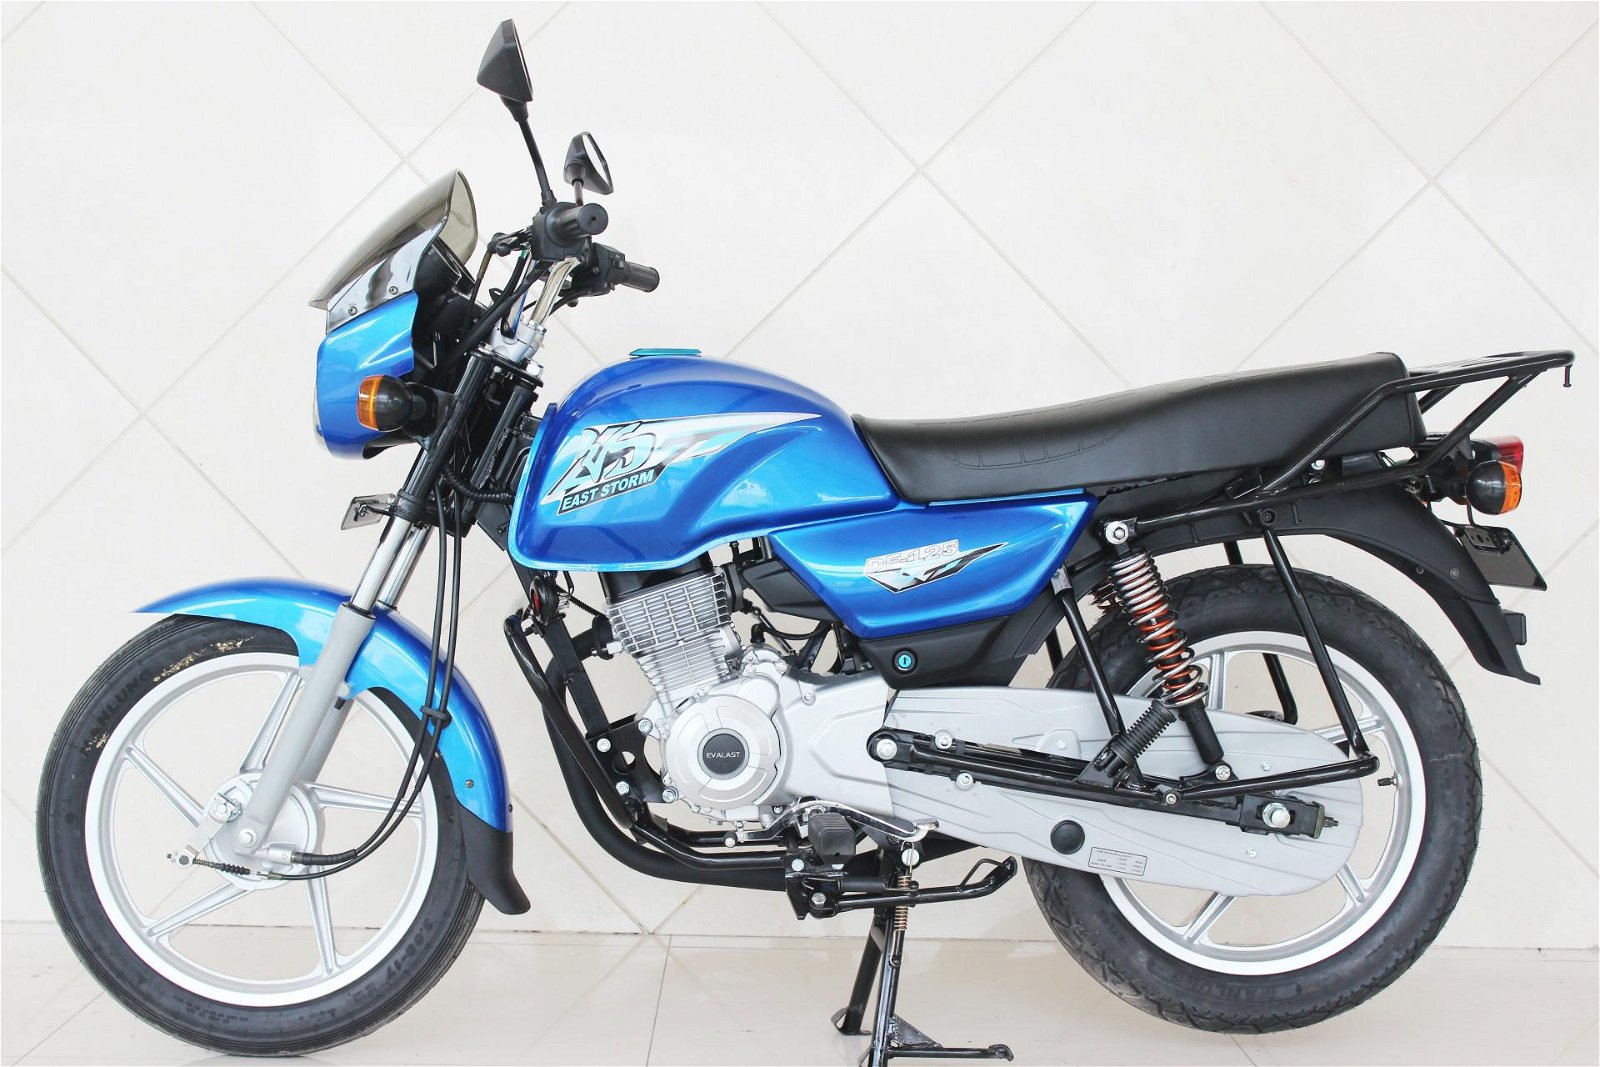  BAJAJ BOXER 125 motorcycle 3